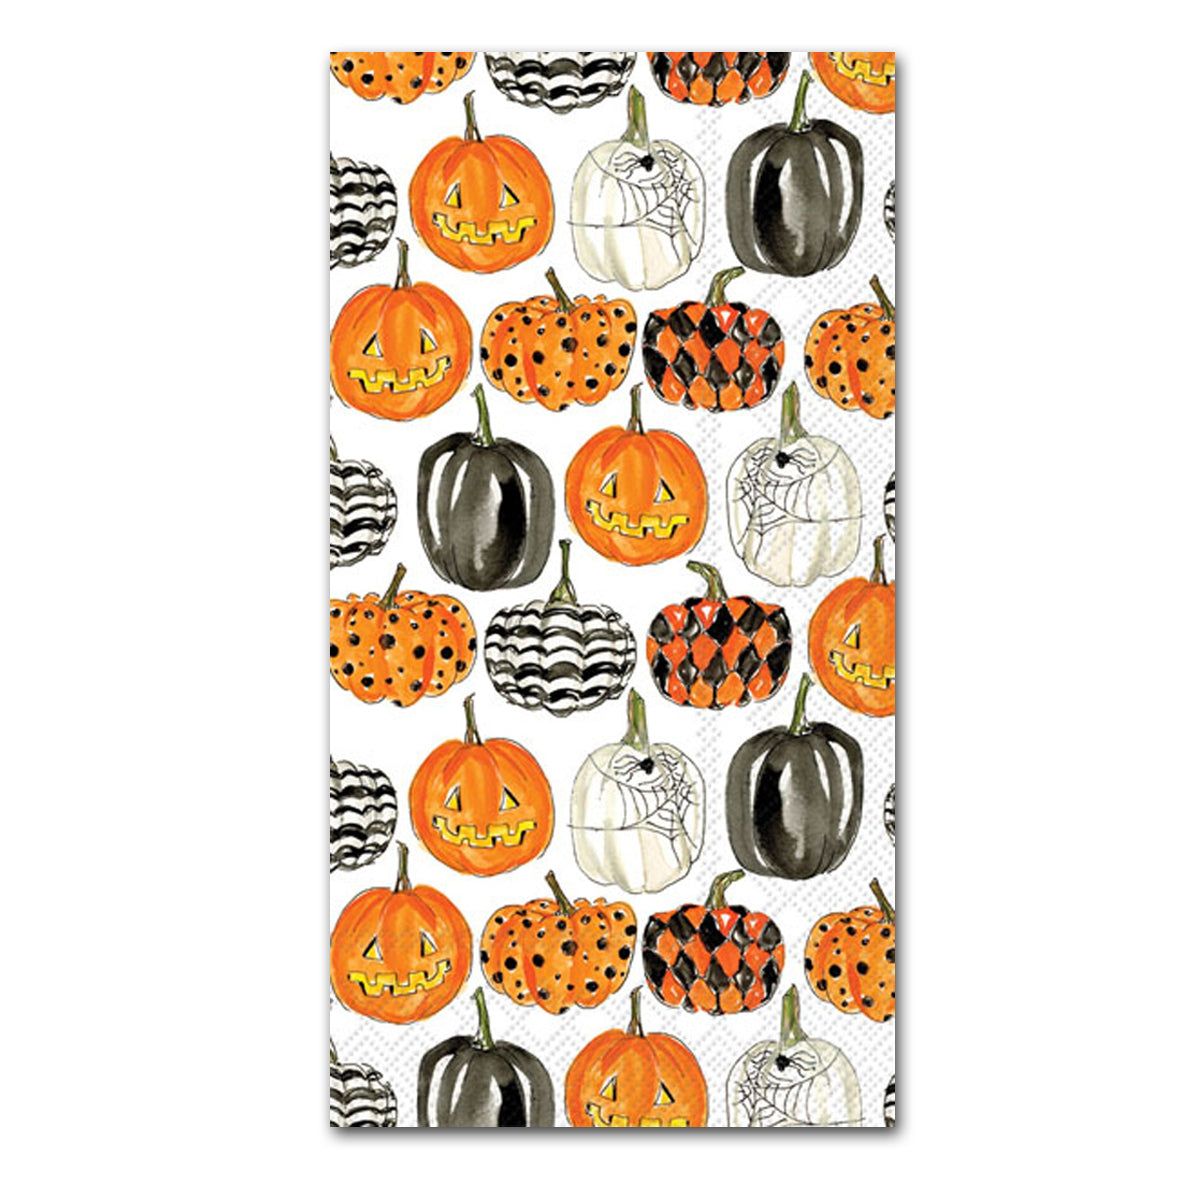 Pumpkin Party Paper Guest Towels - Buffet Napkins